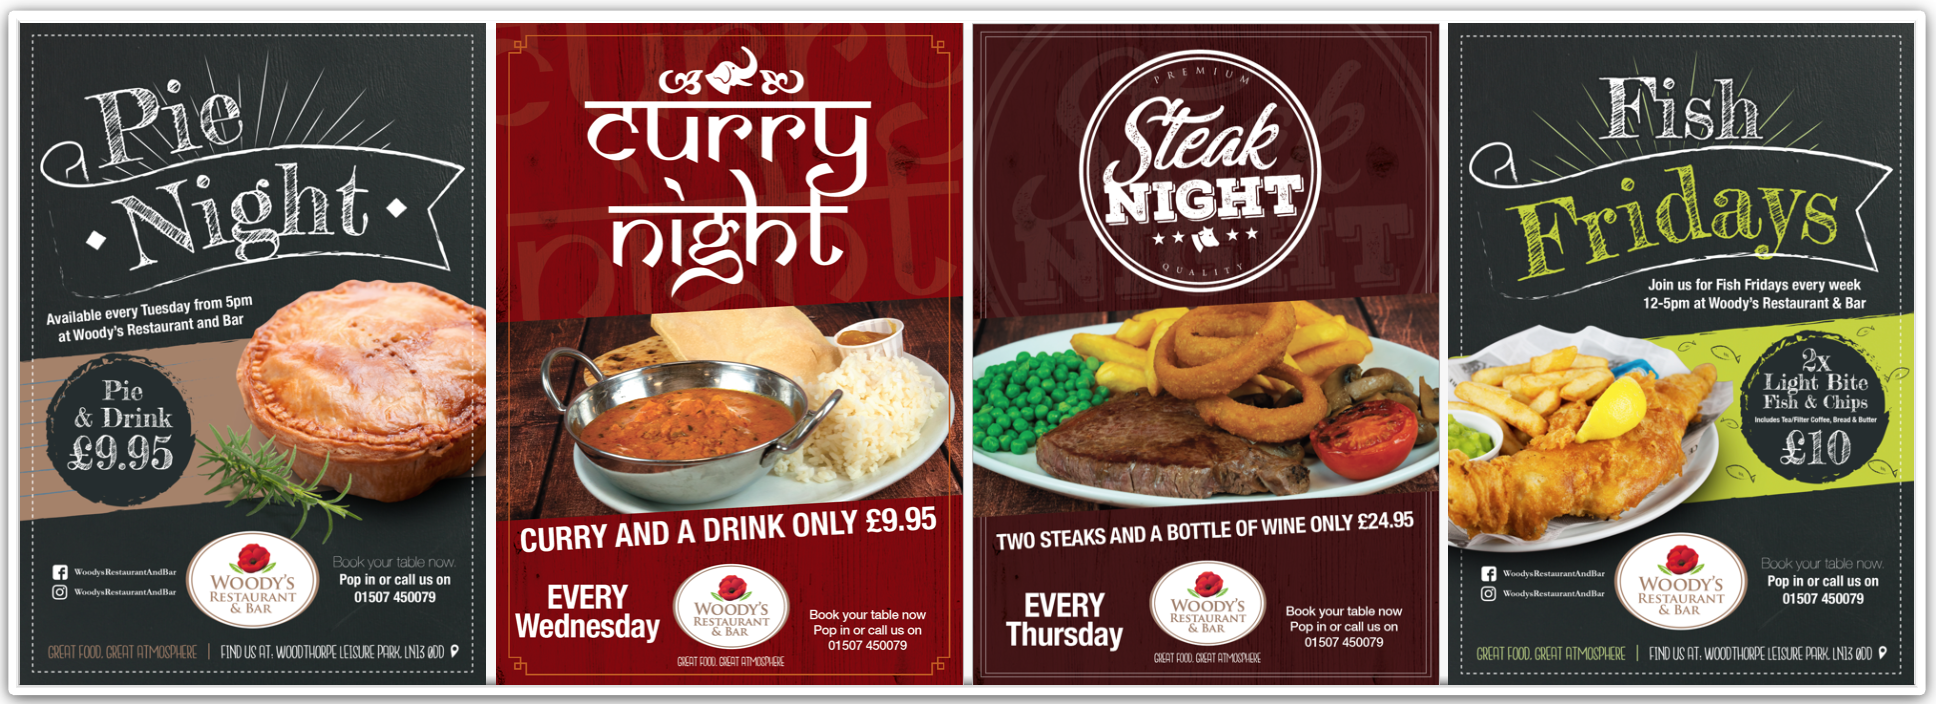 Pie Night, Curry Night, Steak Night, Fish Friday